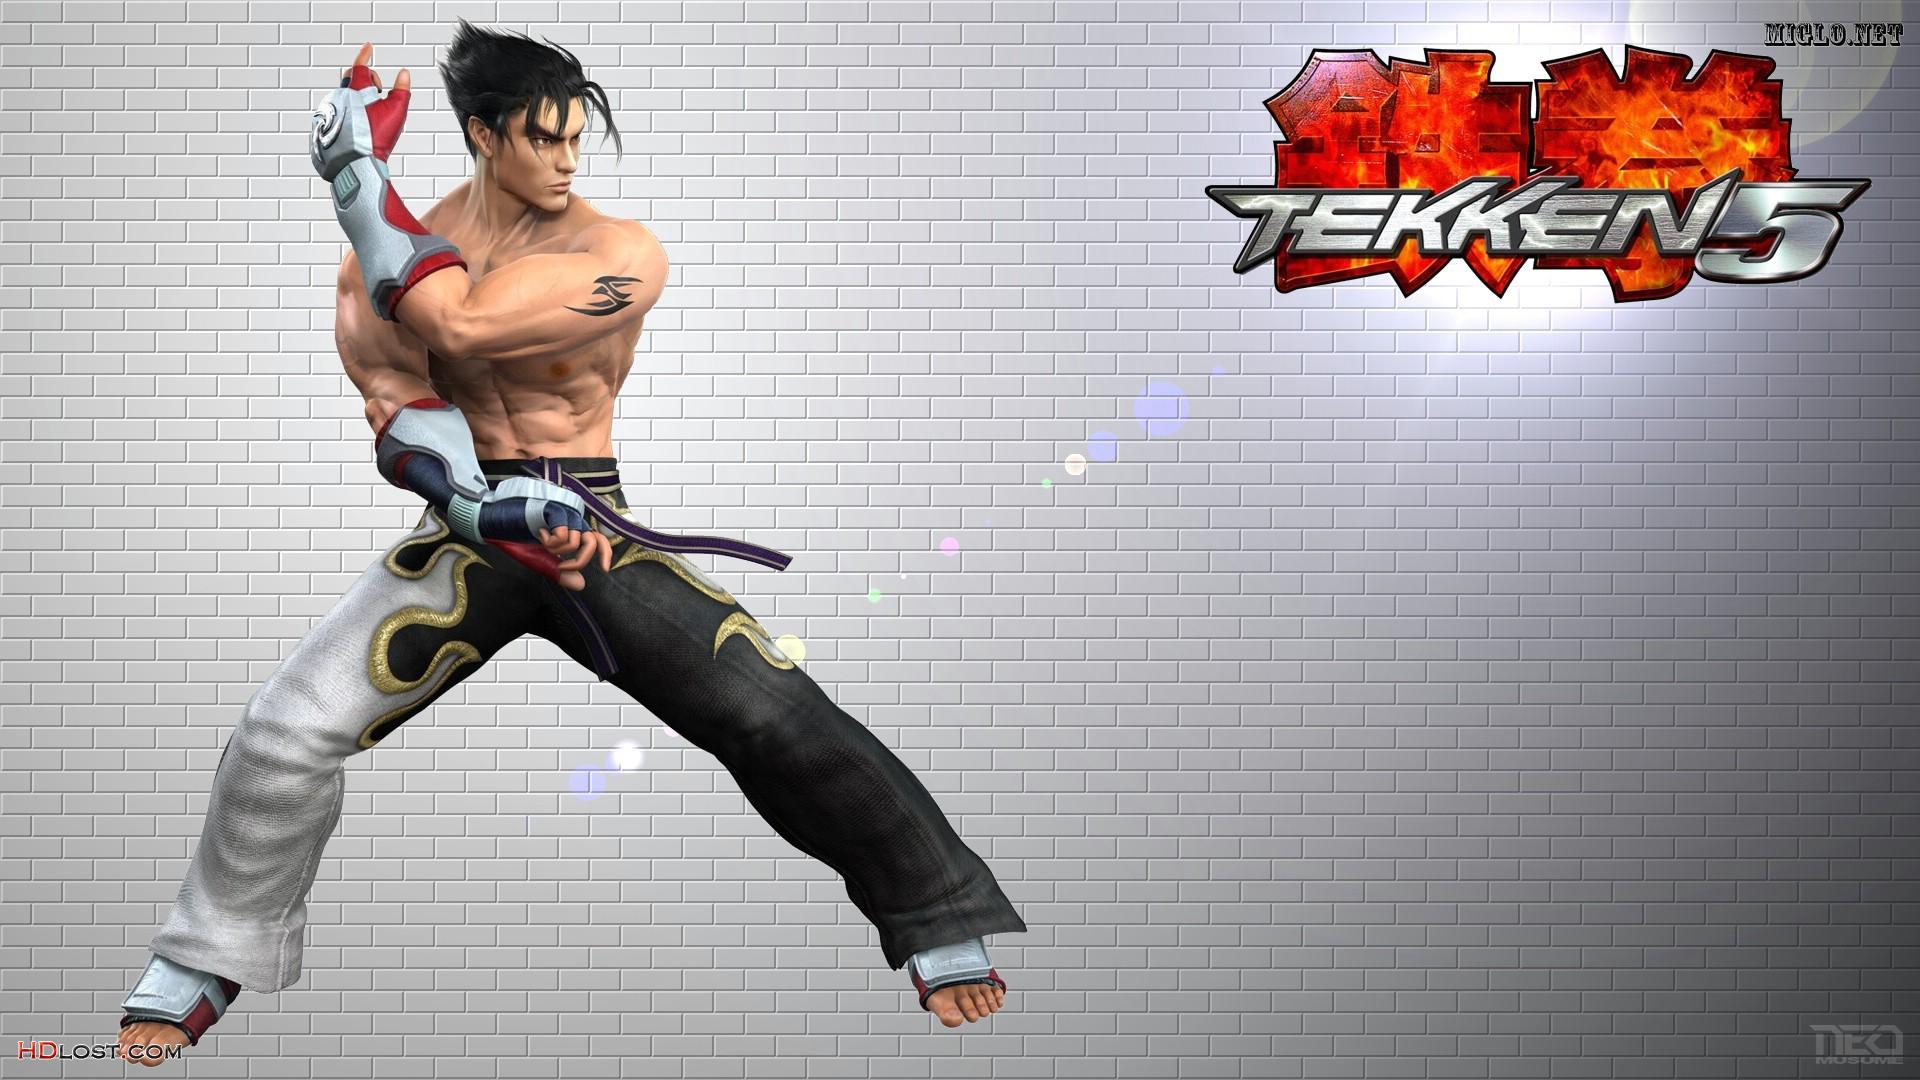 Image - Wallpaper fonds decran Jin Kazama Tekken 5 - Tekken